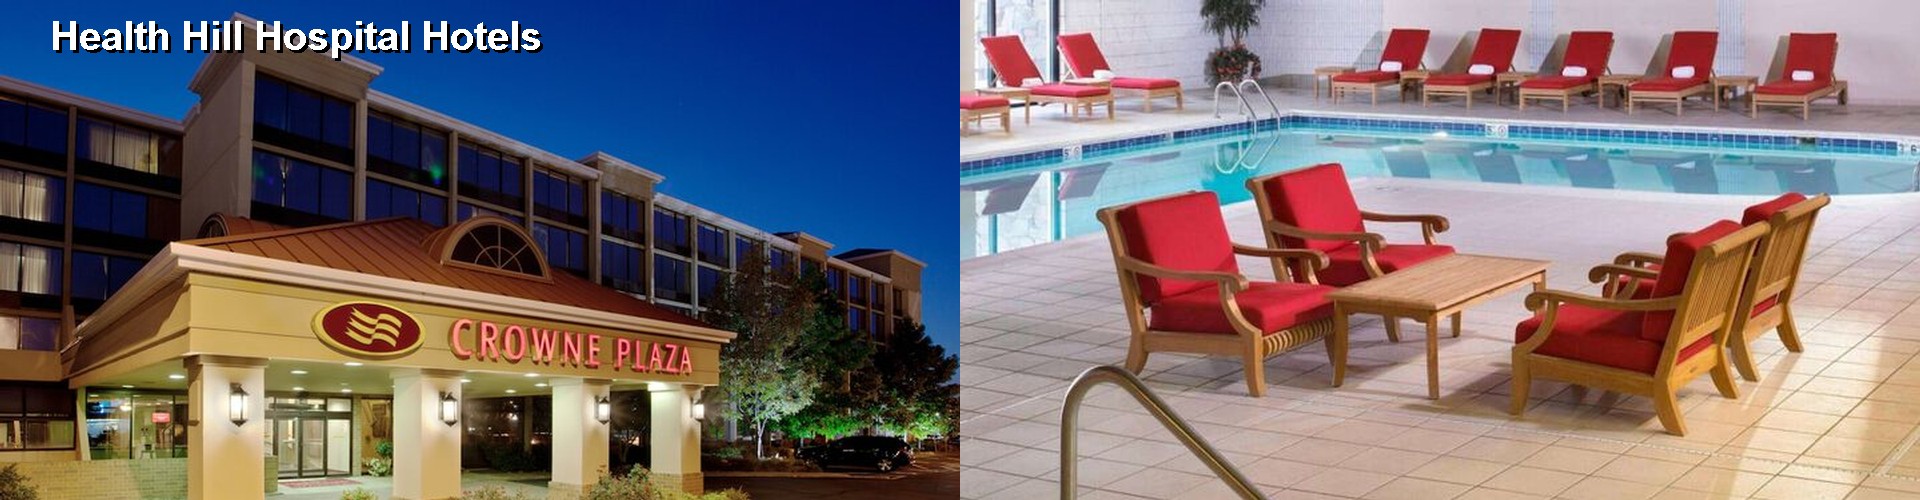 5 Best Hotels near Health Hill Hospital